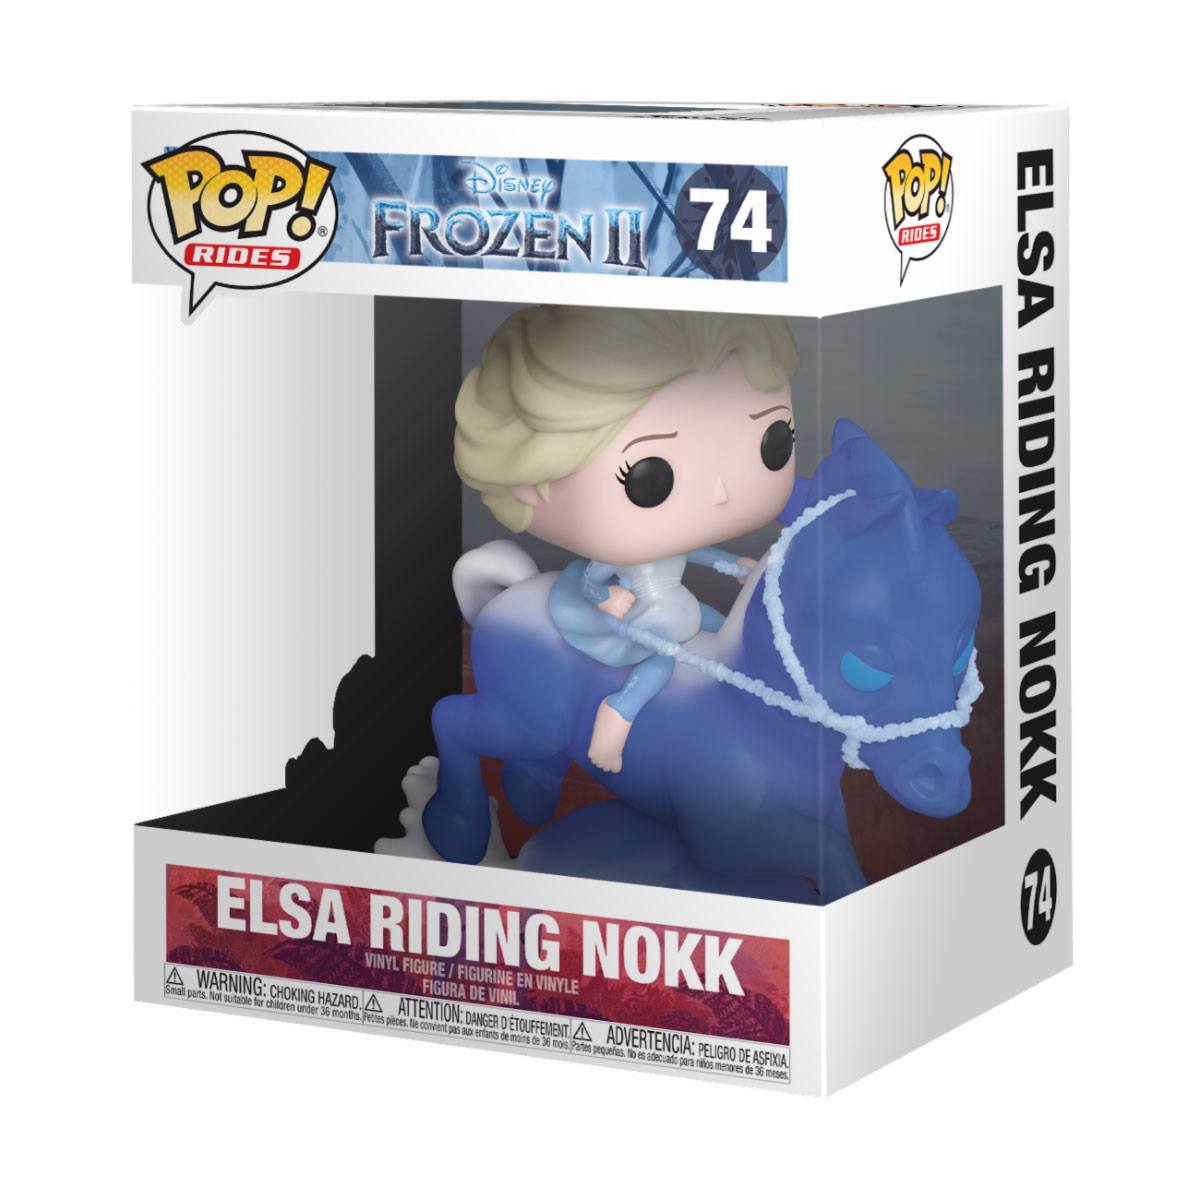 Die Eiskönigin - Völlig unverfroren 2 POP! Rides Vinyl Figur Elsa Riding Nokk 18 cm